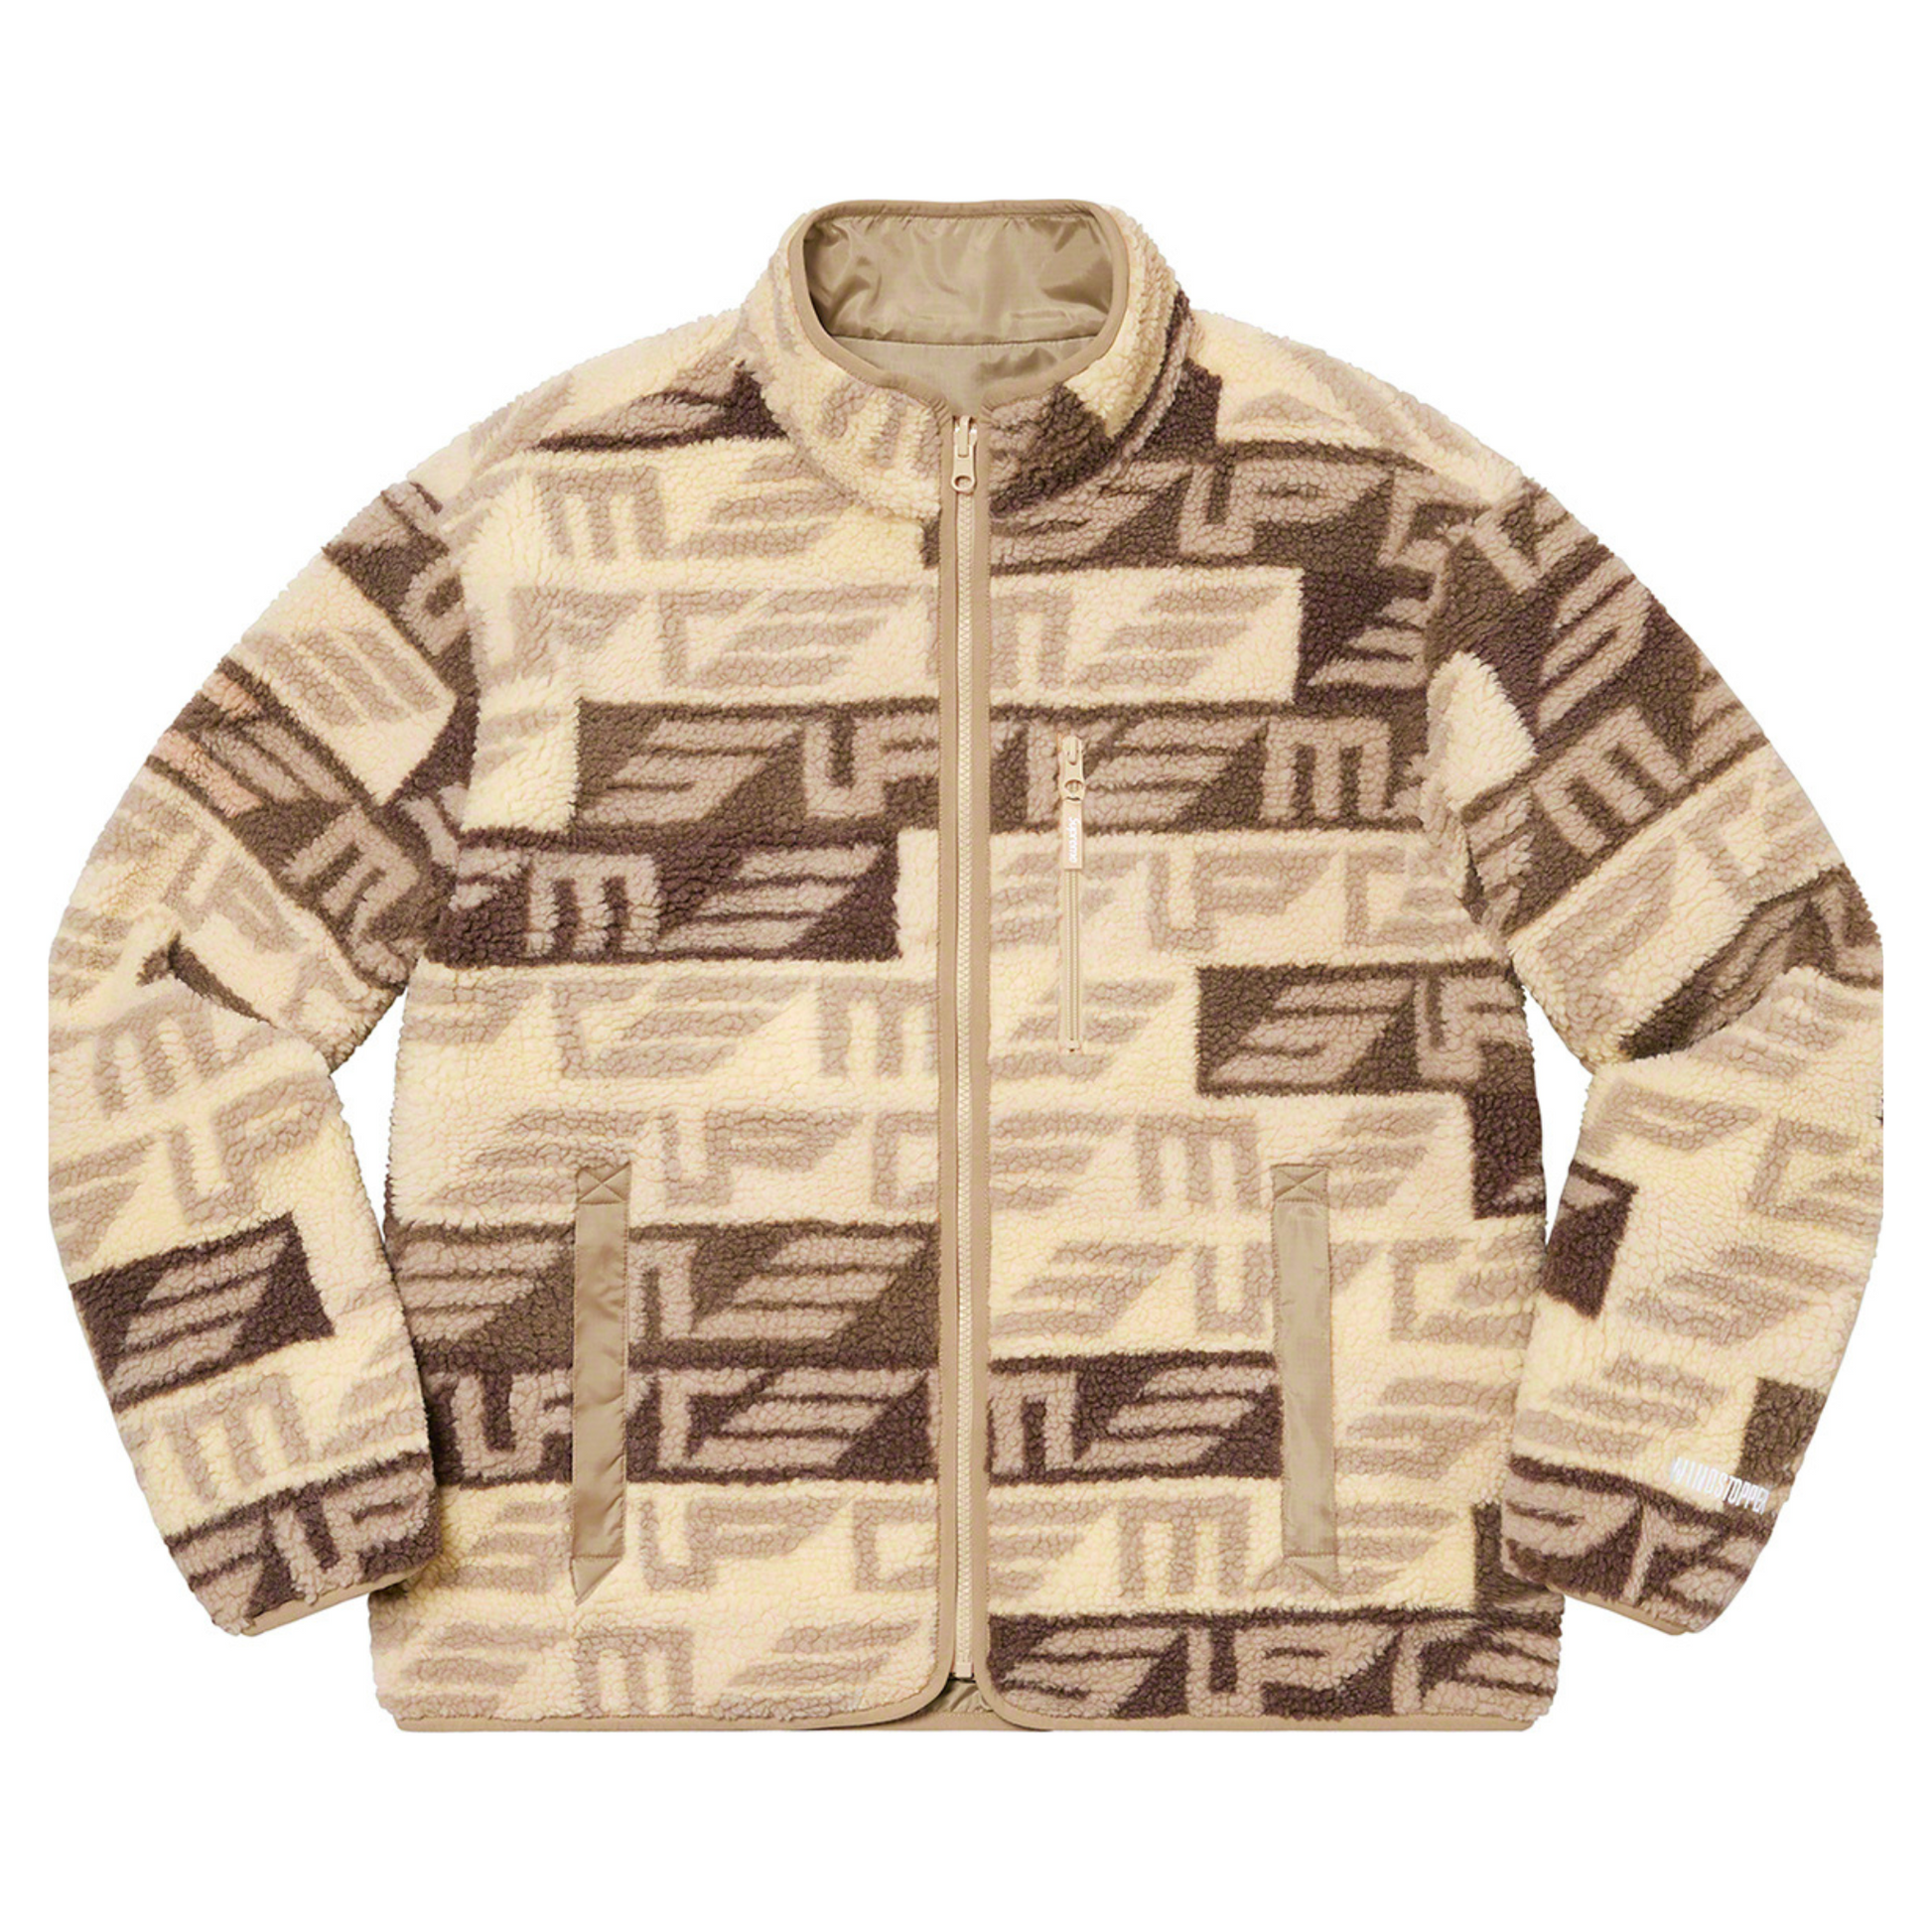 Supreme GEO REVERSIBLE WINDSTOPPER Fleece Jacket – The Superior Shop